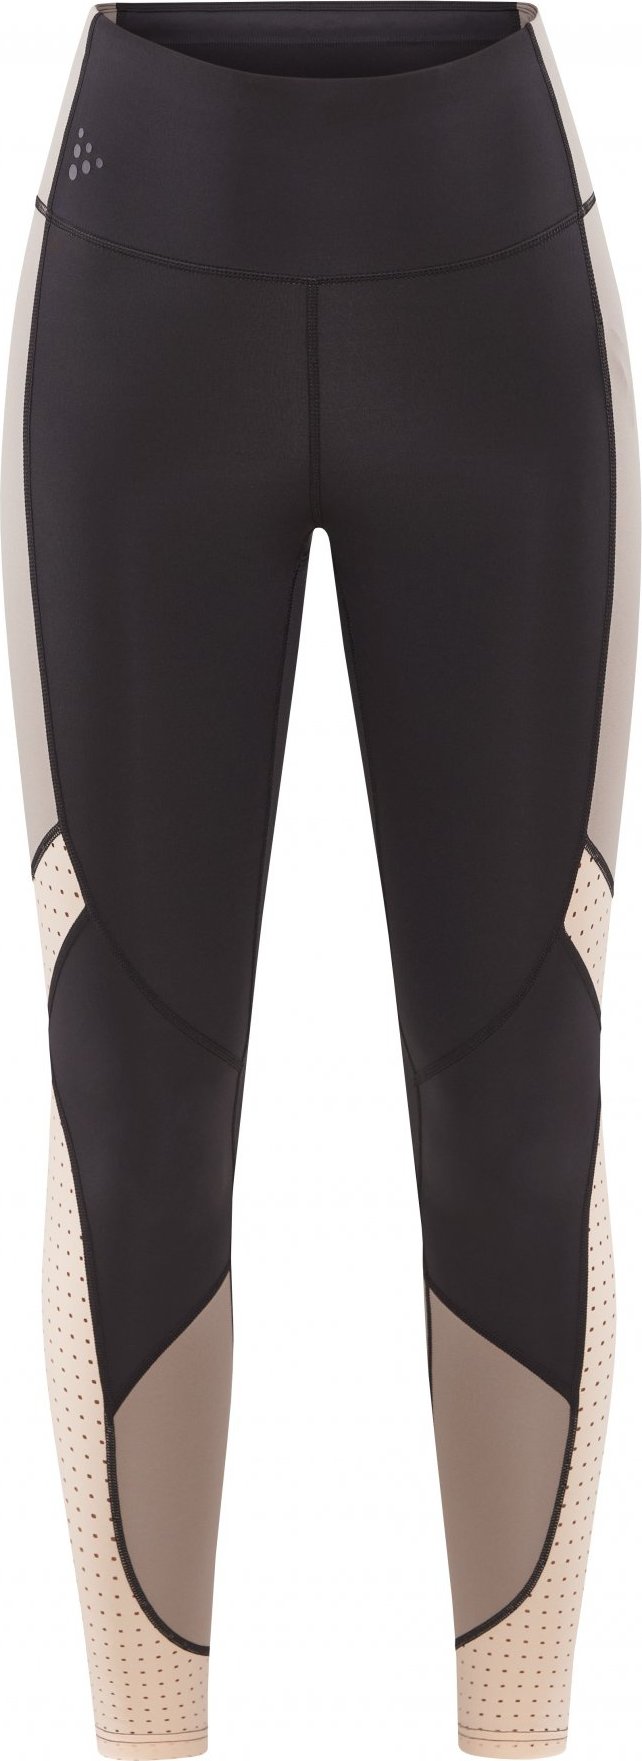 Dámské elastické kalhoty CRAFT Adv Hit Tights 2 šedé Velikost: XL